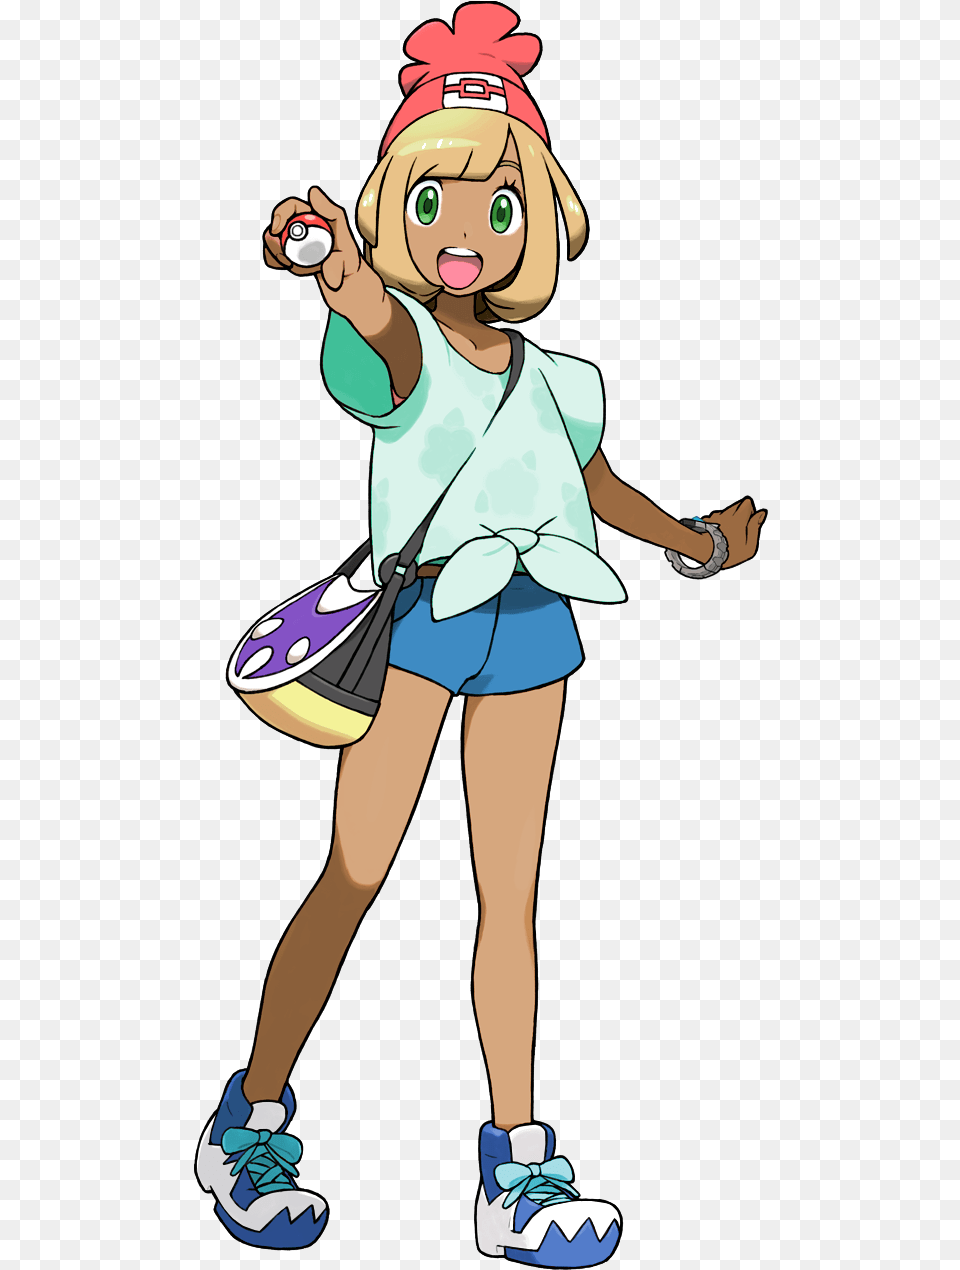 Hd Custom Female Pokemon Trainer Pokemon Alola Female Trainer, Person, Child, Girl, Footwear Png Image